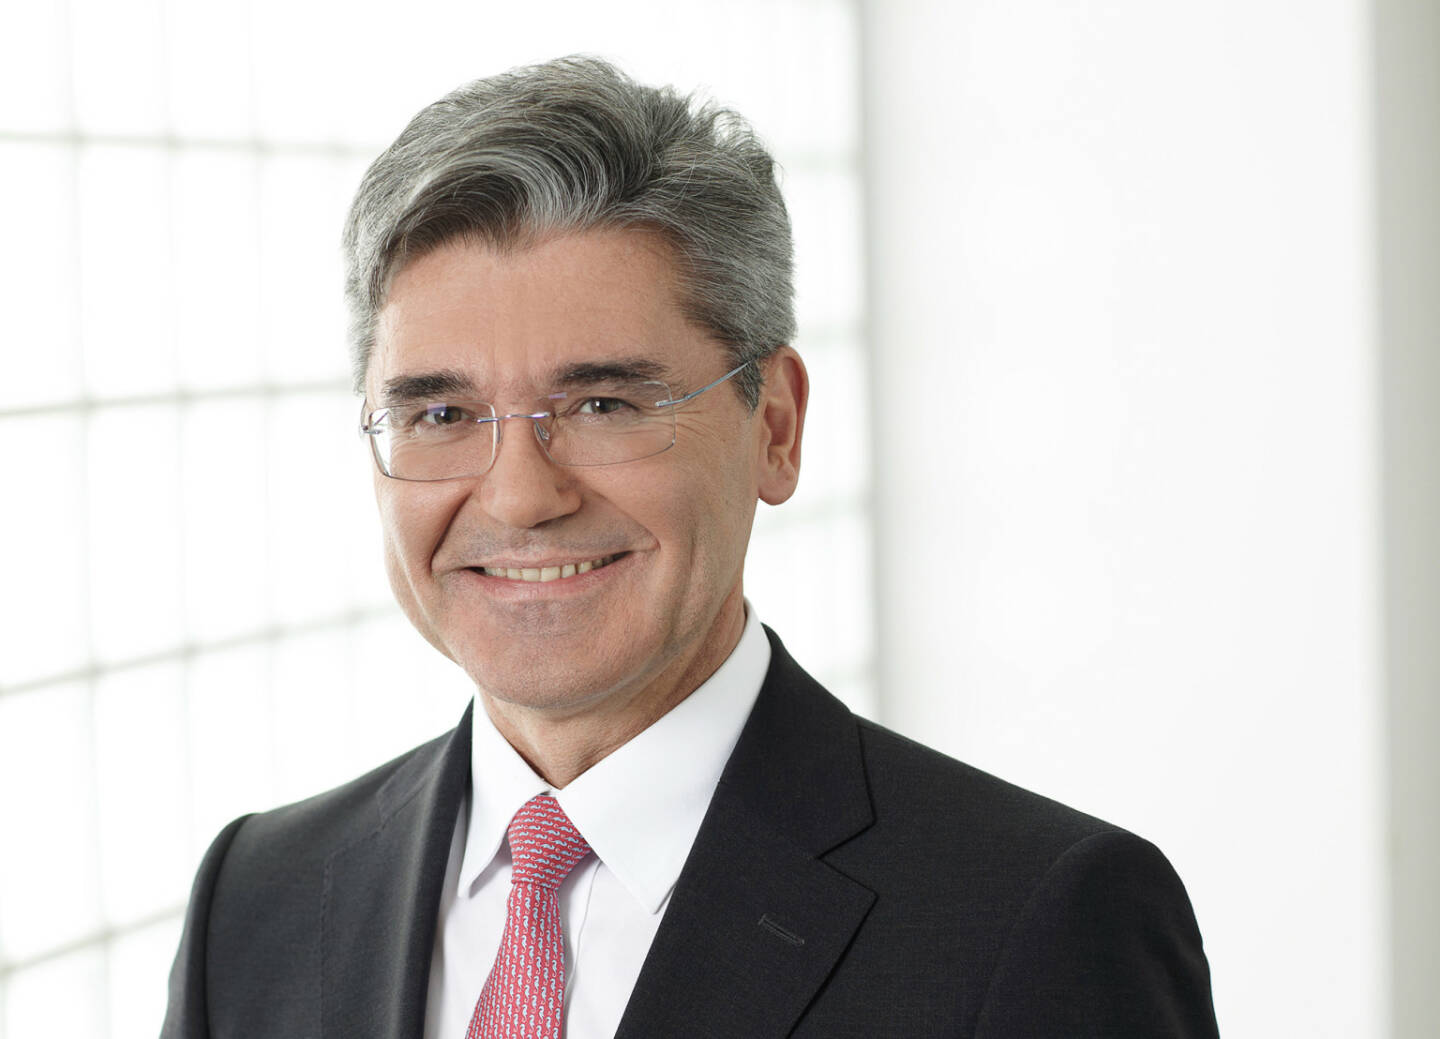 Joe Kaeser, Vorsitzender des Vorstands der Siemens AG

